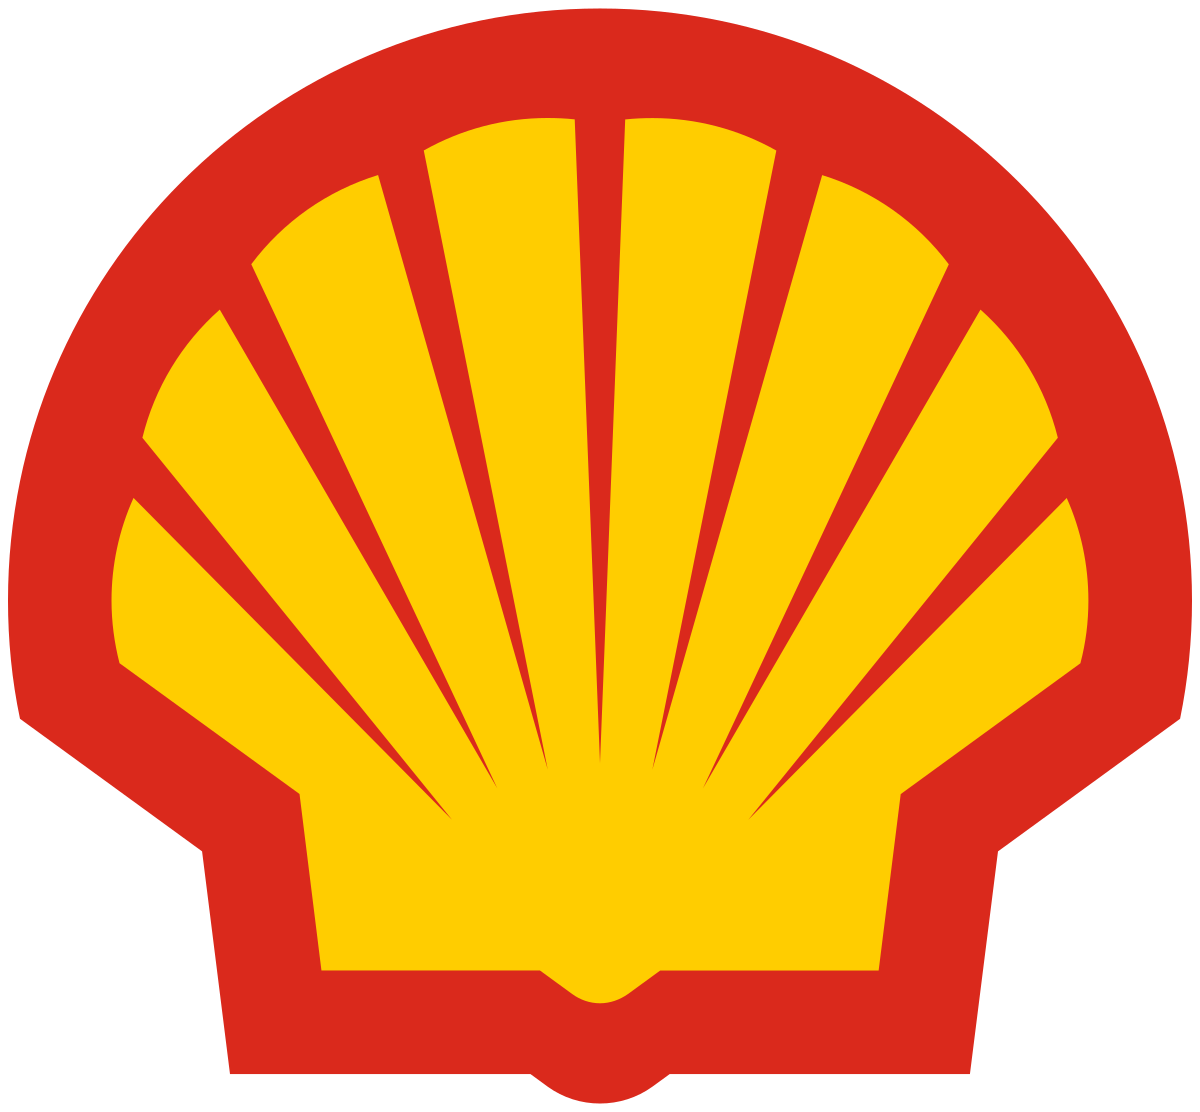 Shell_logo-svg1641823831-0.png